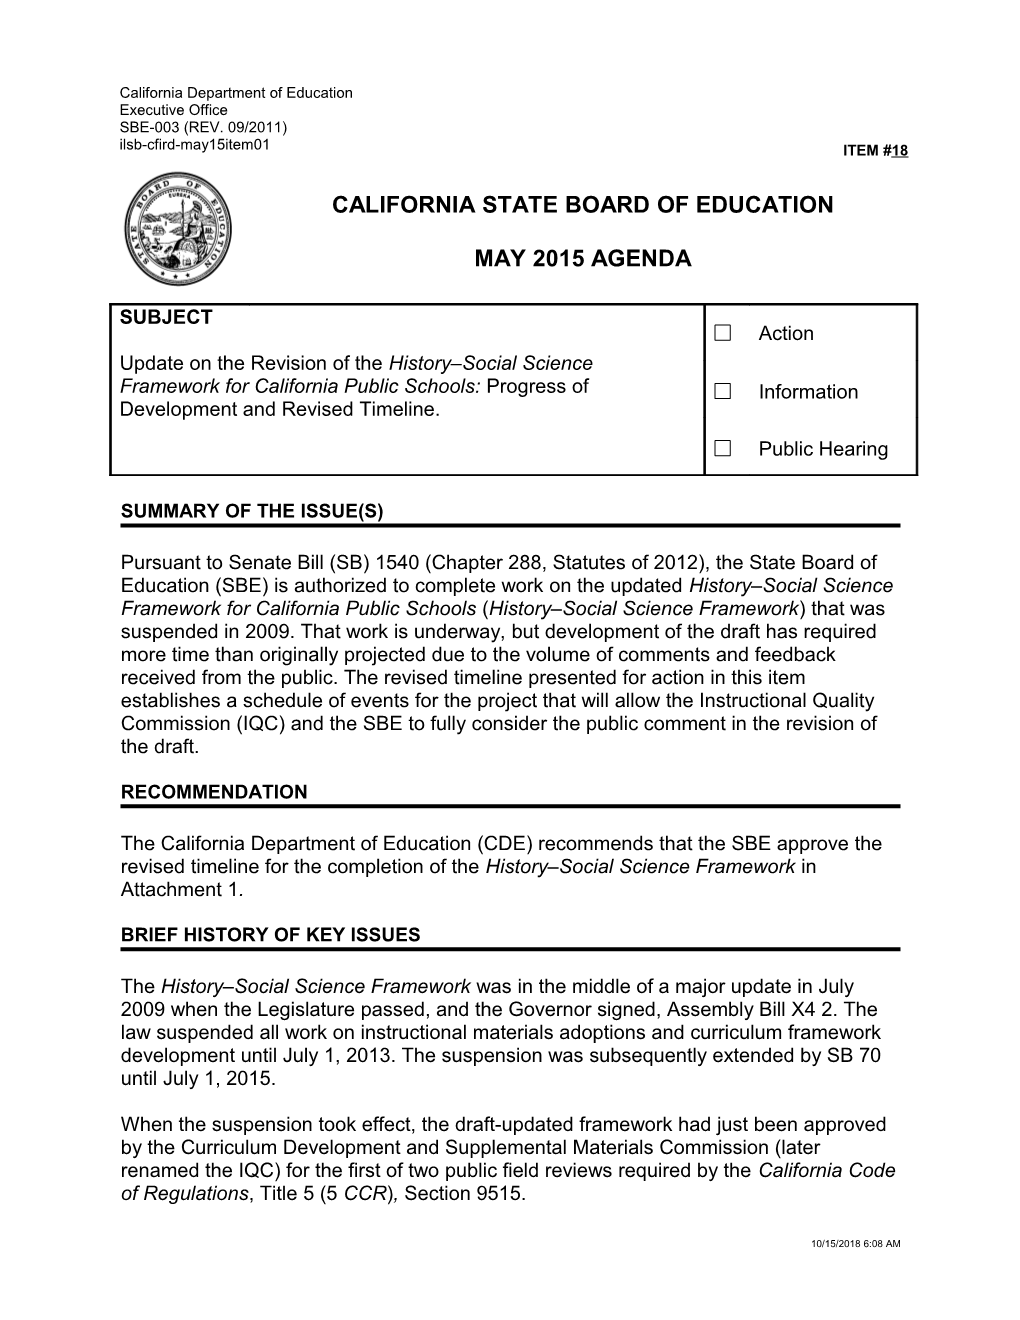 May 2015 Agenda Item 18 - Meeting Agendas (CA State Board of Education)